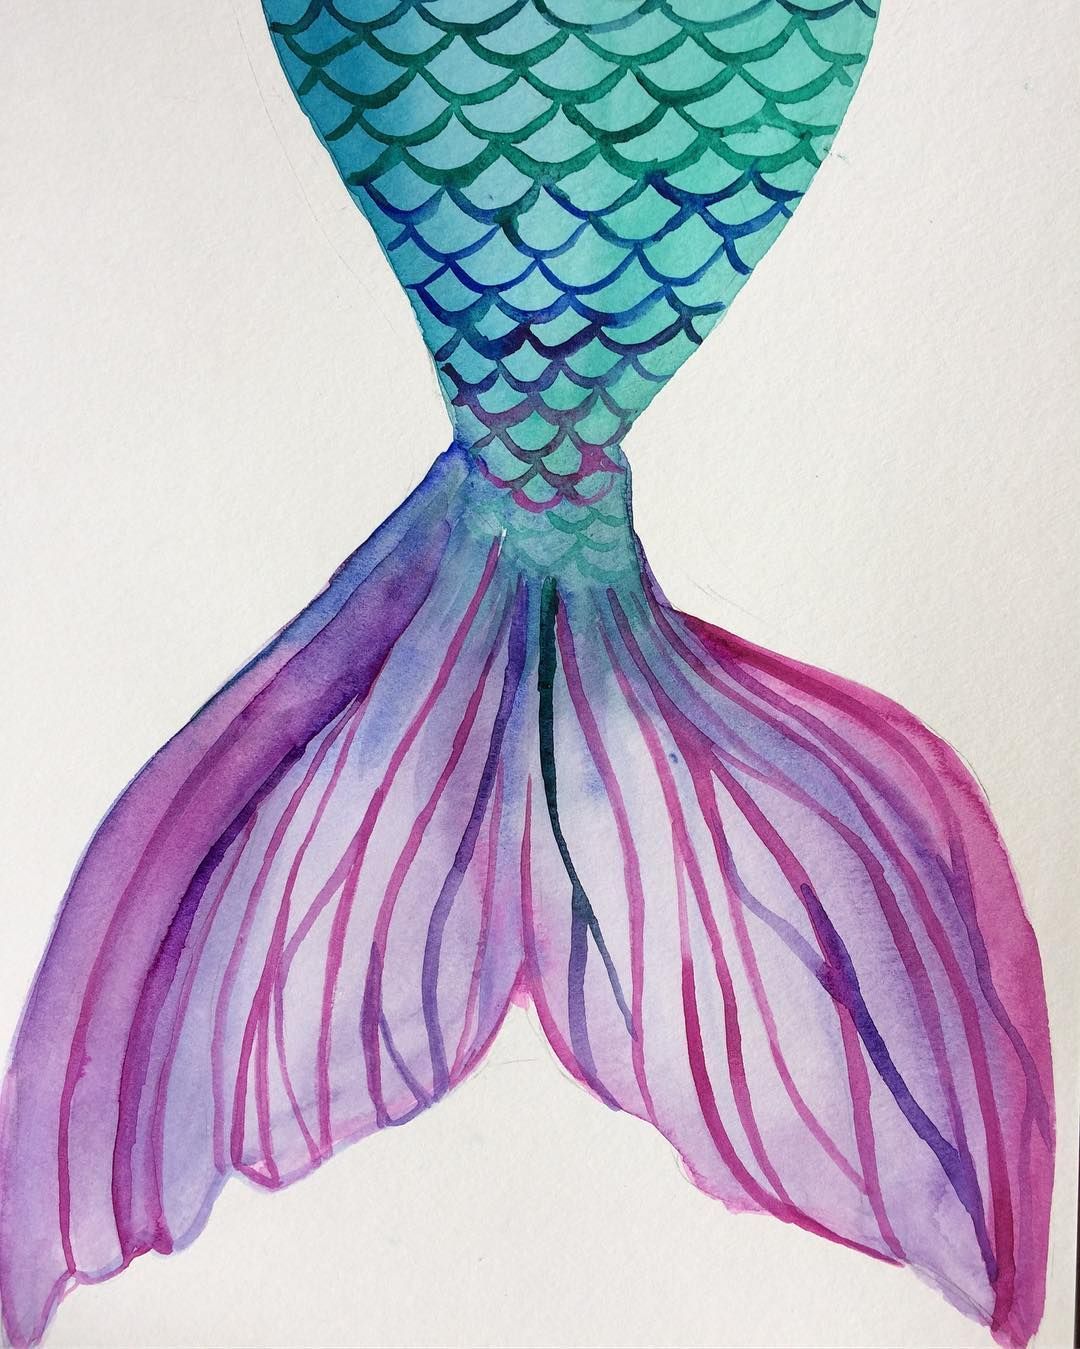 Mermaid Tail Designs Wallpapers - Wallpaper Cave